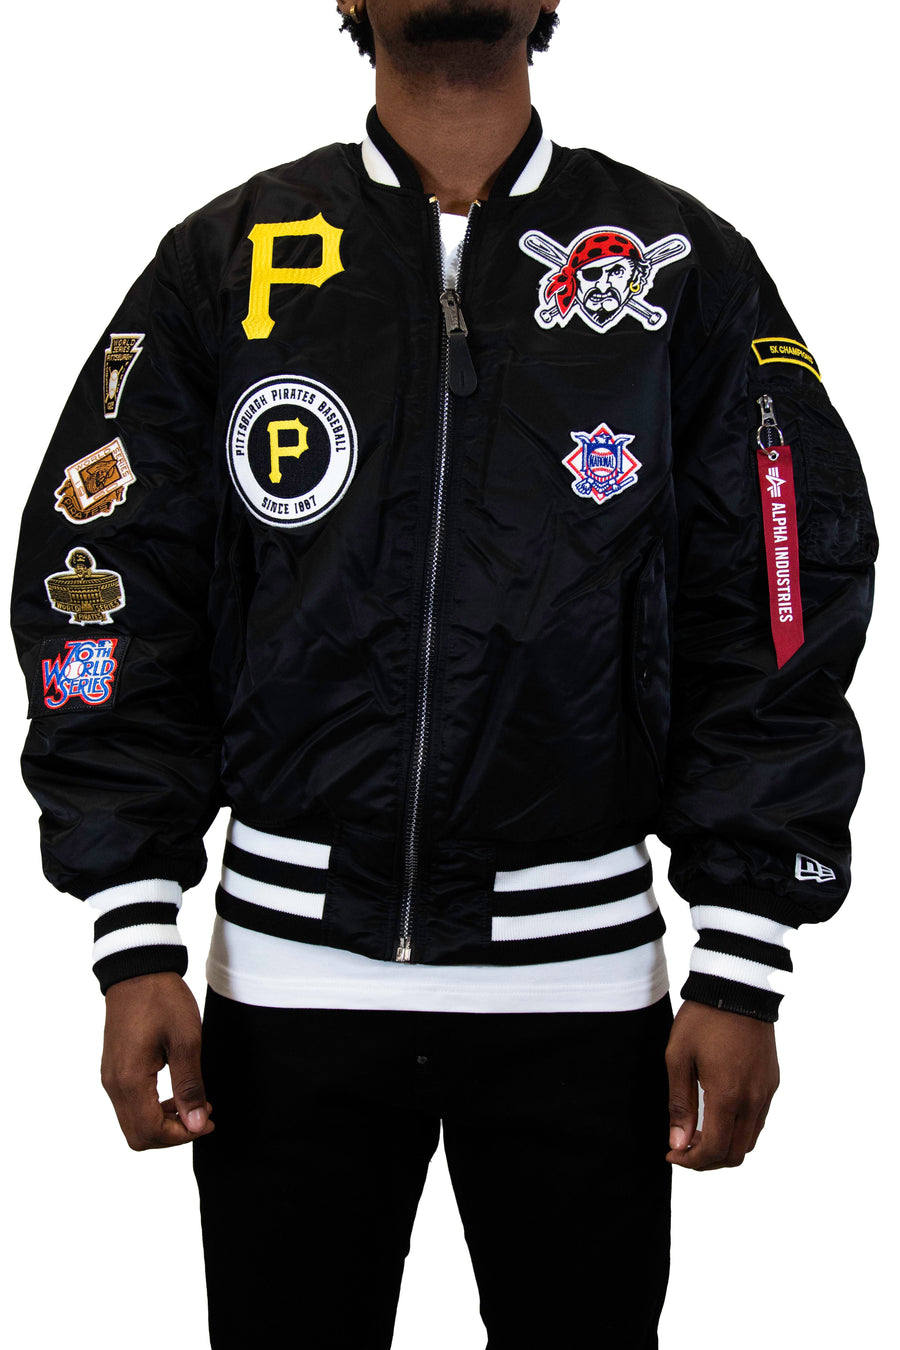 Black bomber jacket with men's badges - ALPHA INDUSTRIES - Pavidas